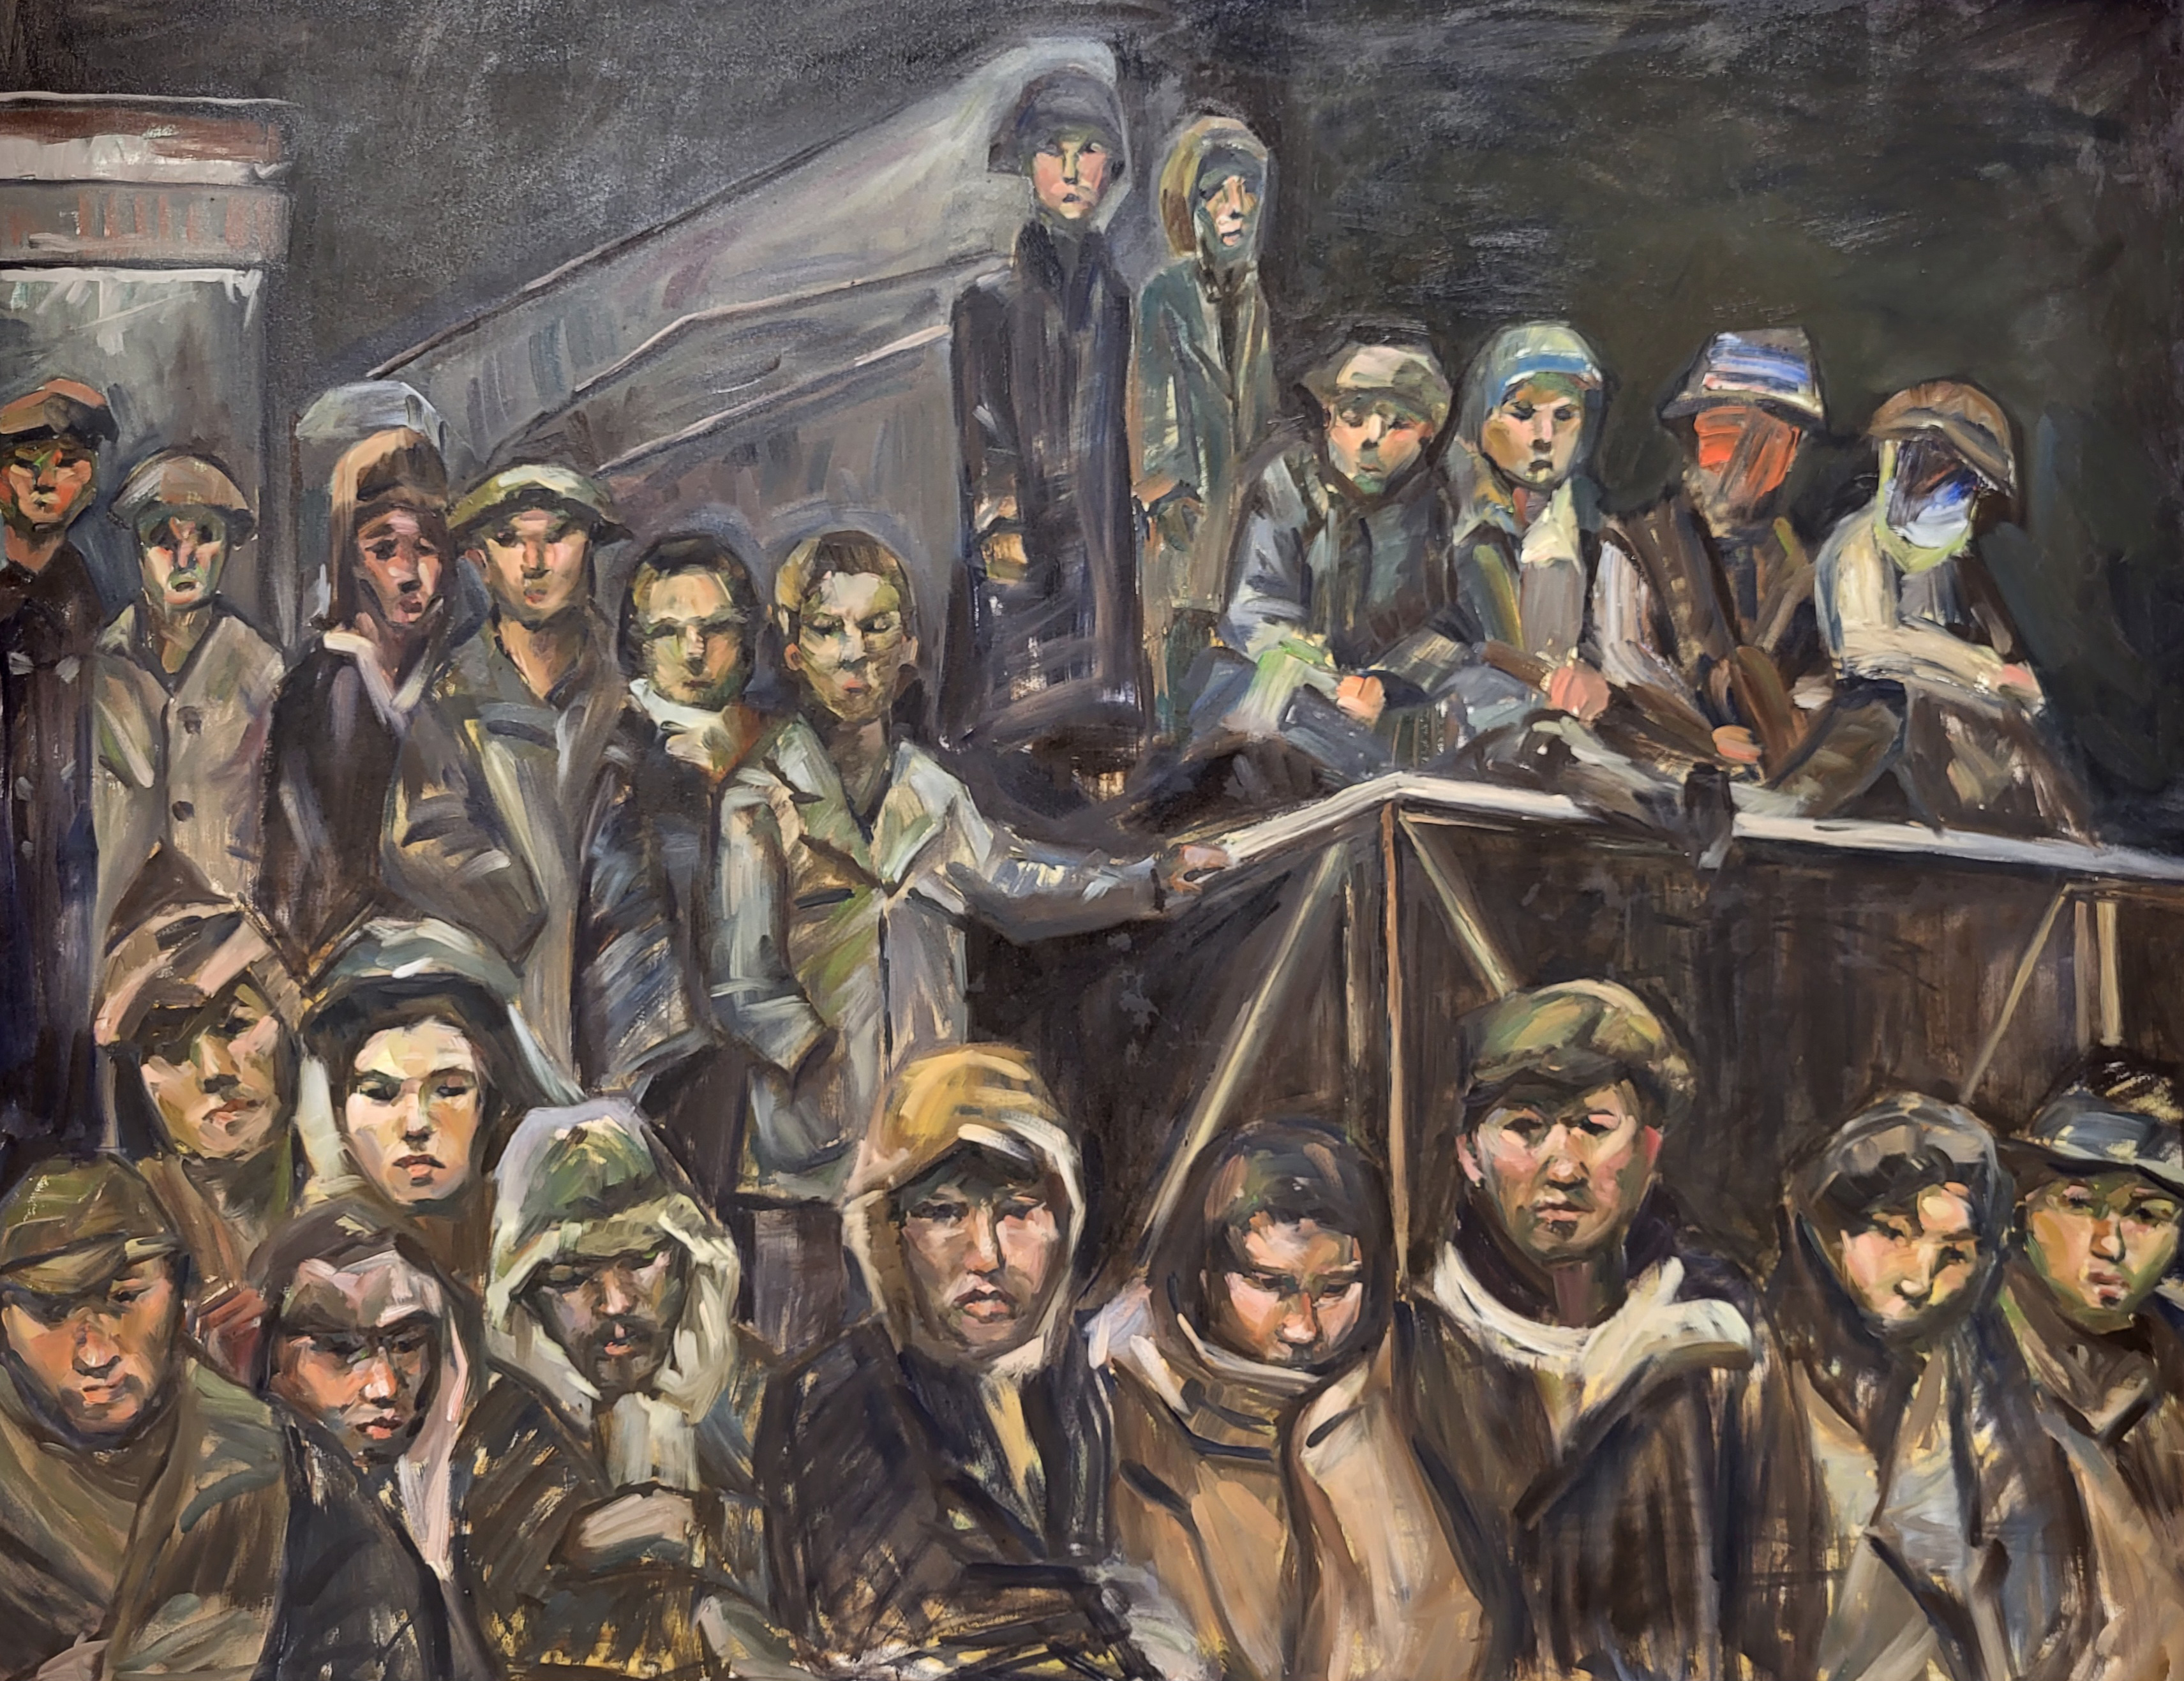 Shinae Kim, "Children of the Moon", Oil on canvas, 48" x 60", 2023.